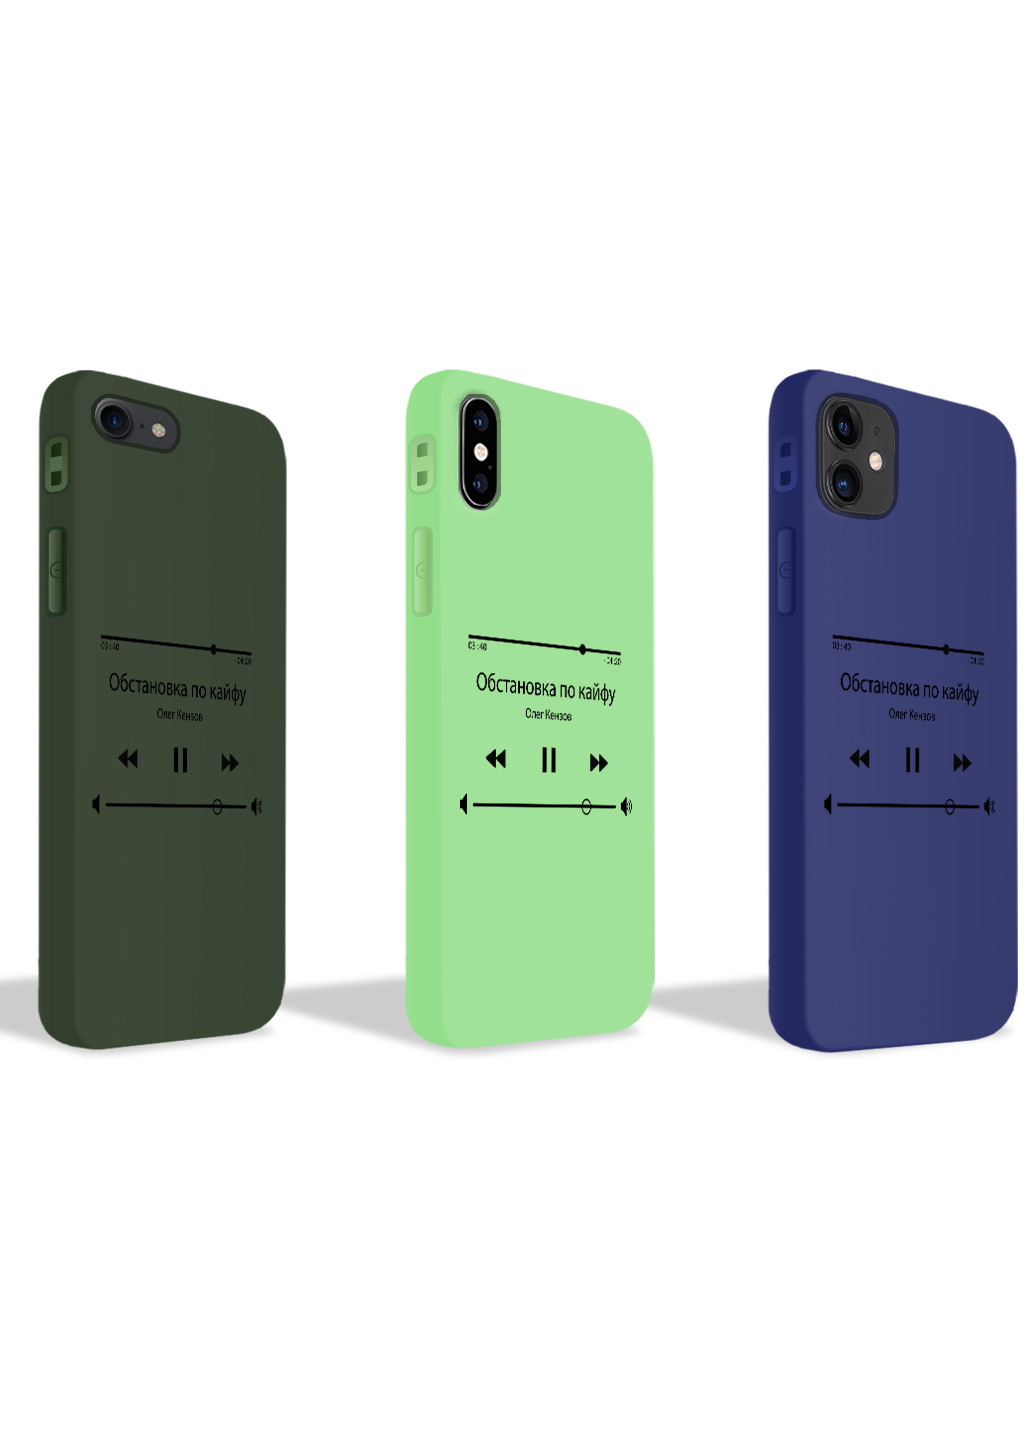 Чохол силіконовий Apple Iphone 6 Плейлист Обстановка по кайфу Олег Кензов (6937-1628) MobiPrint (219778020)